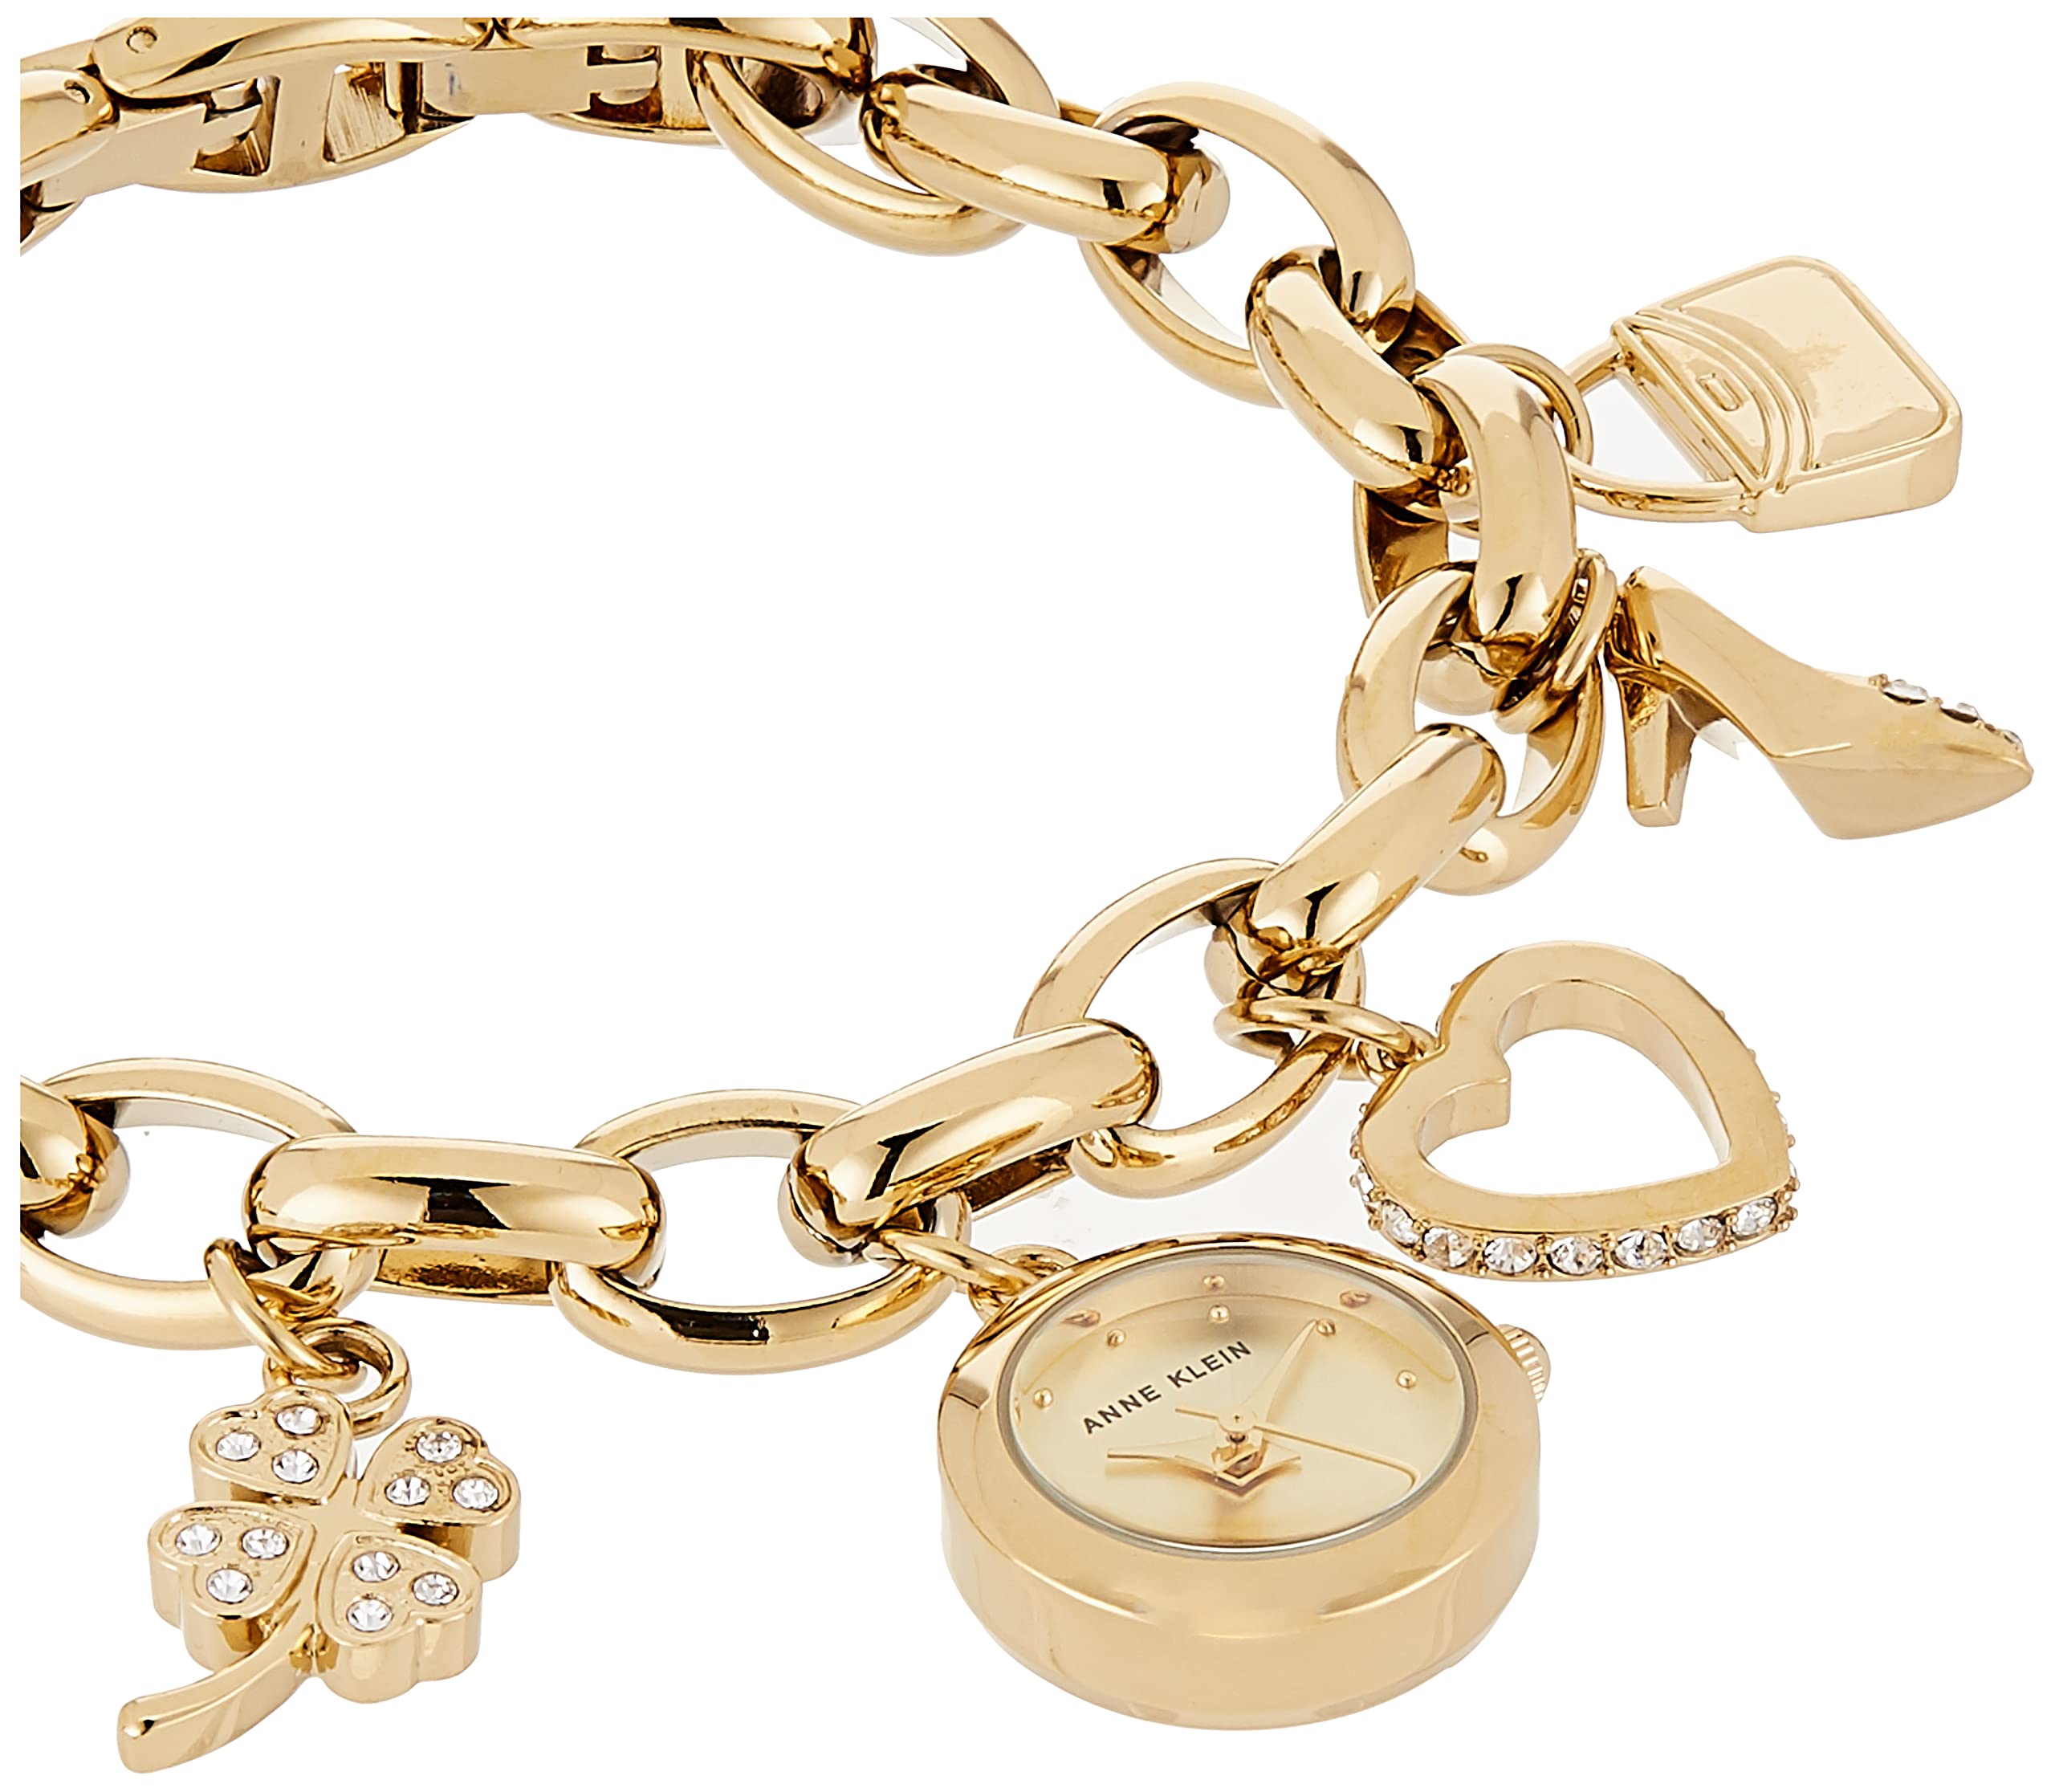 Time Paris Rectangle Silver Dial & Silver Charm Bracelet Watch with CZ |  Nomination UK